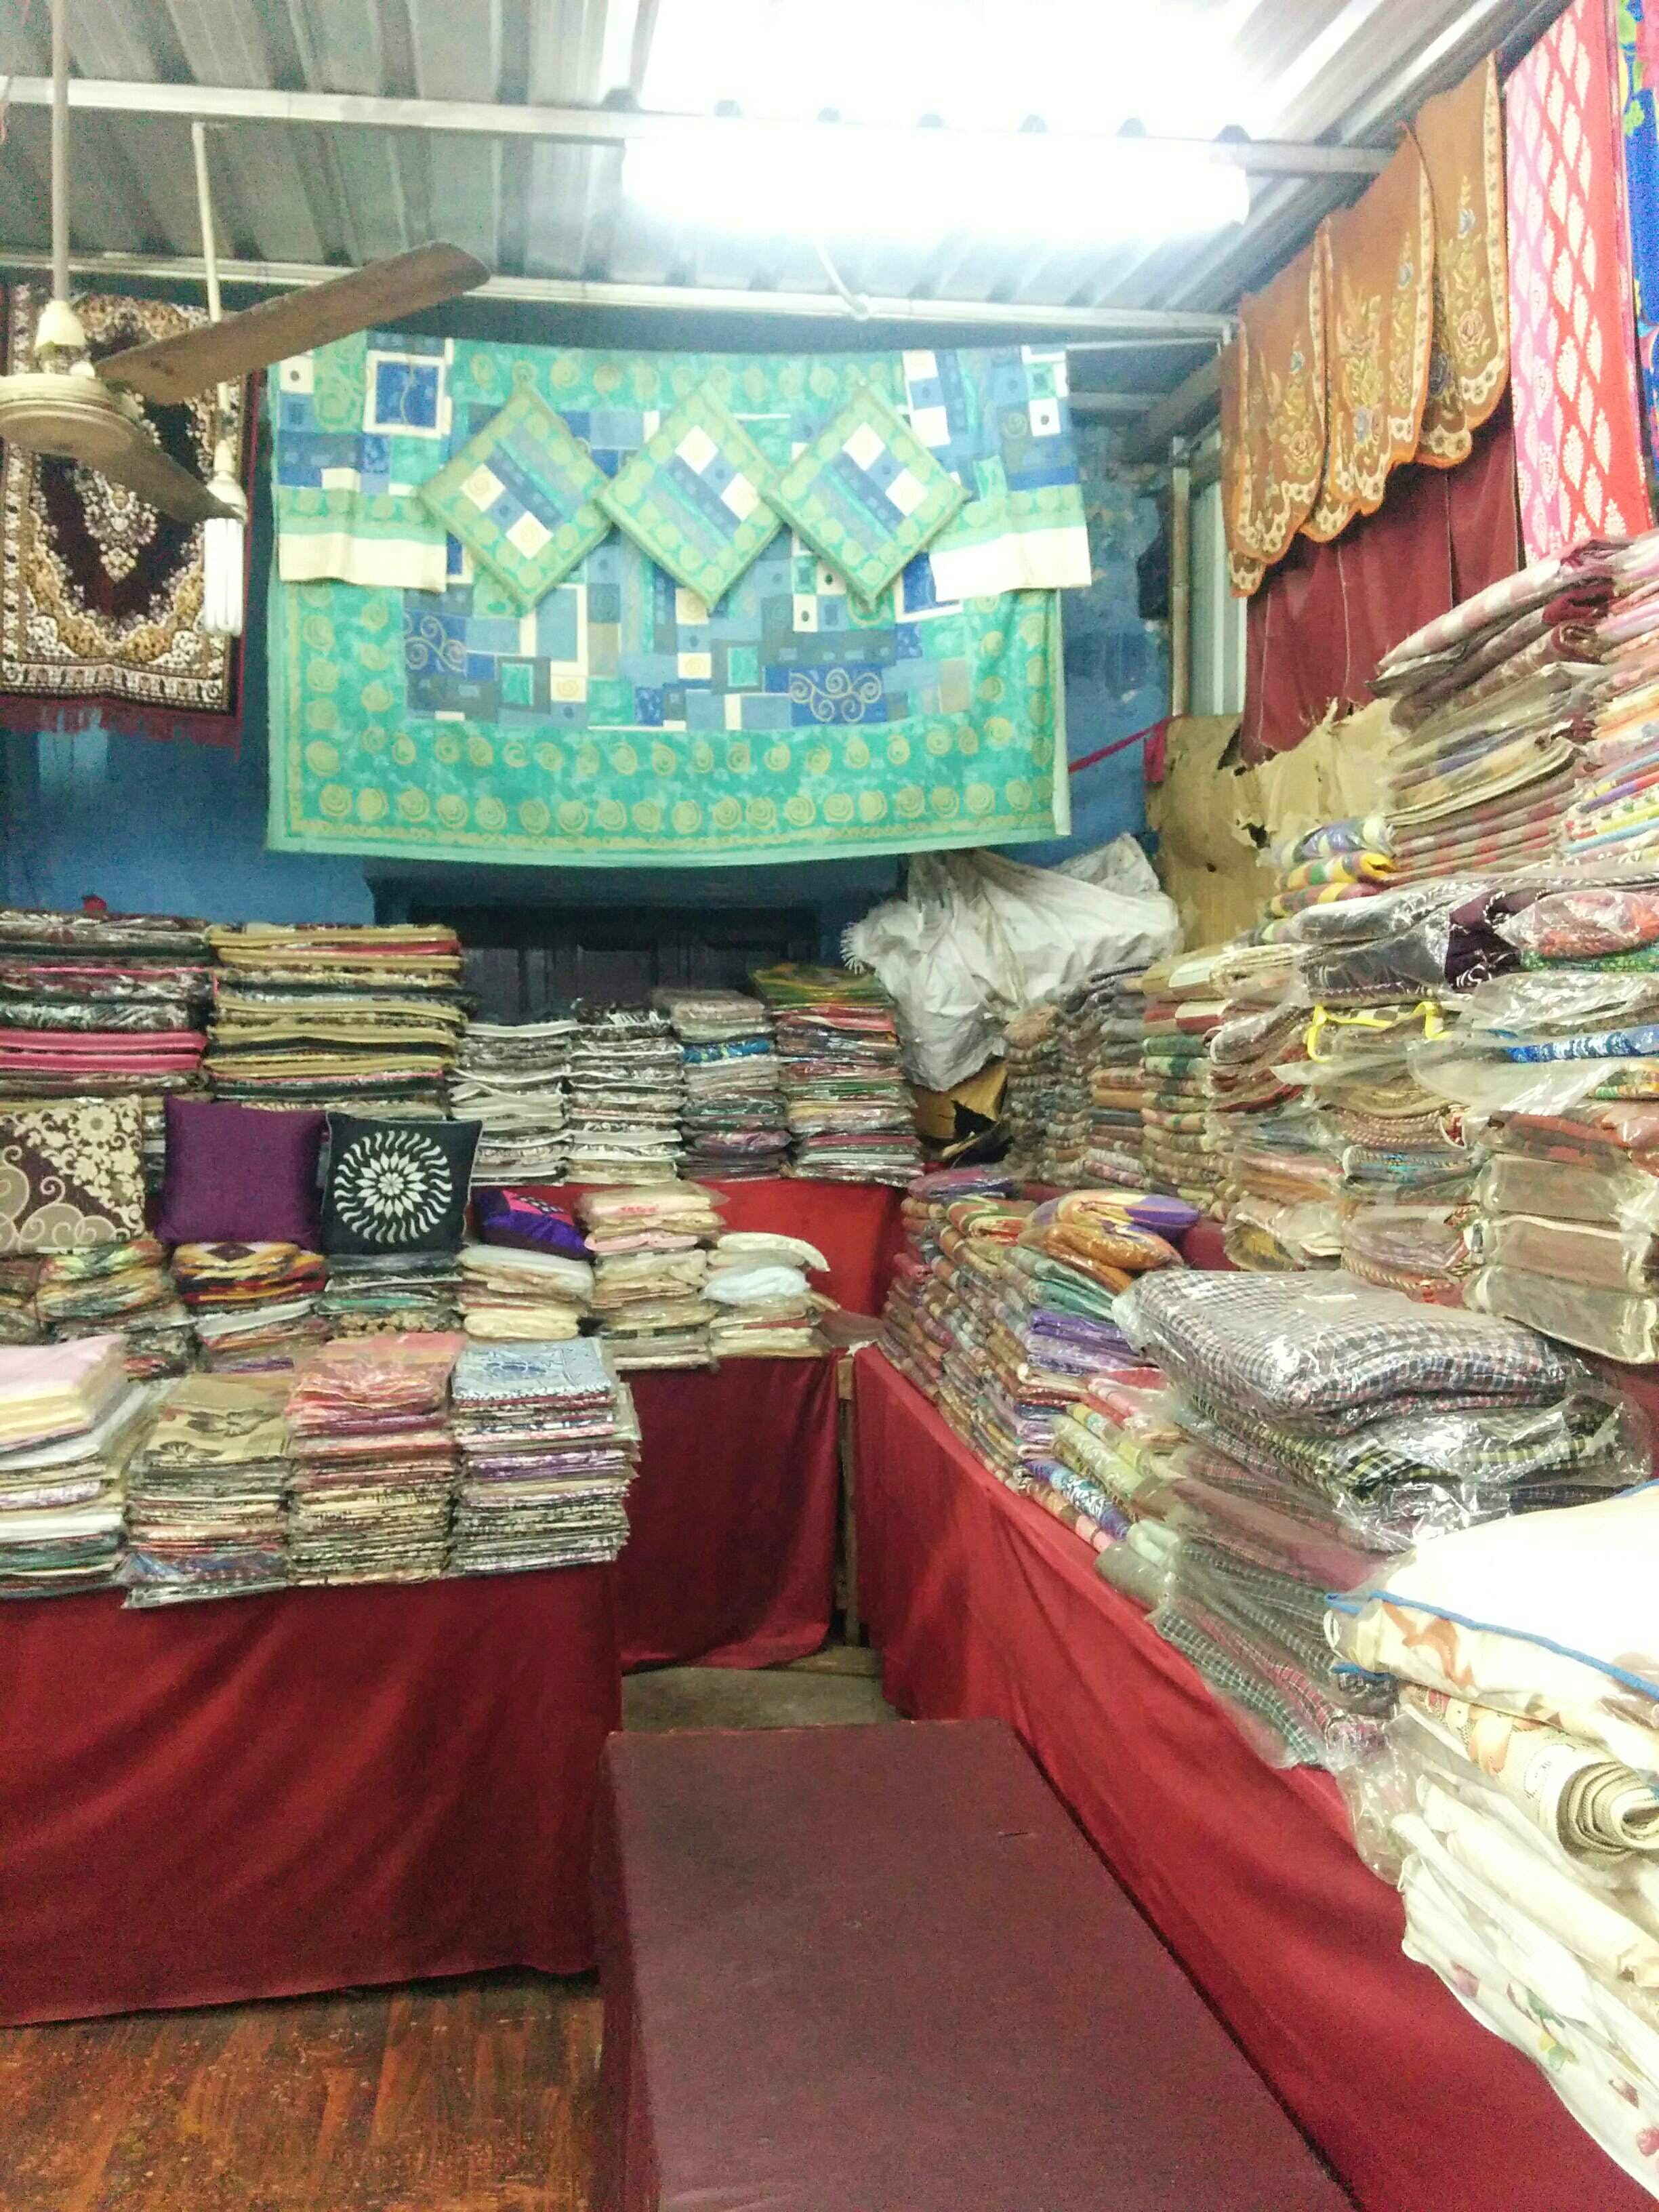 Textile,Bazaar,Linens,Market,Building,Interior design,Furniture